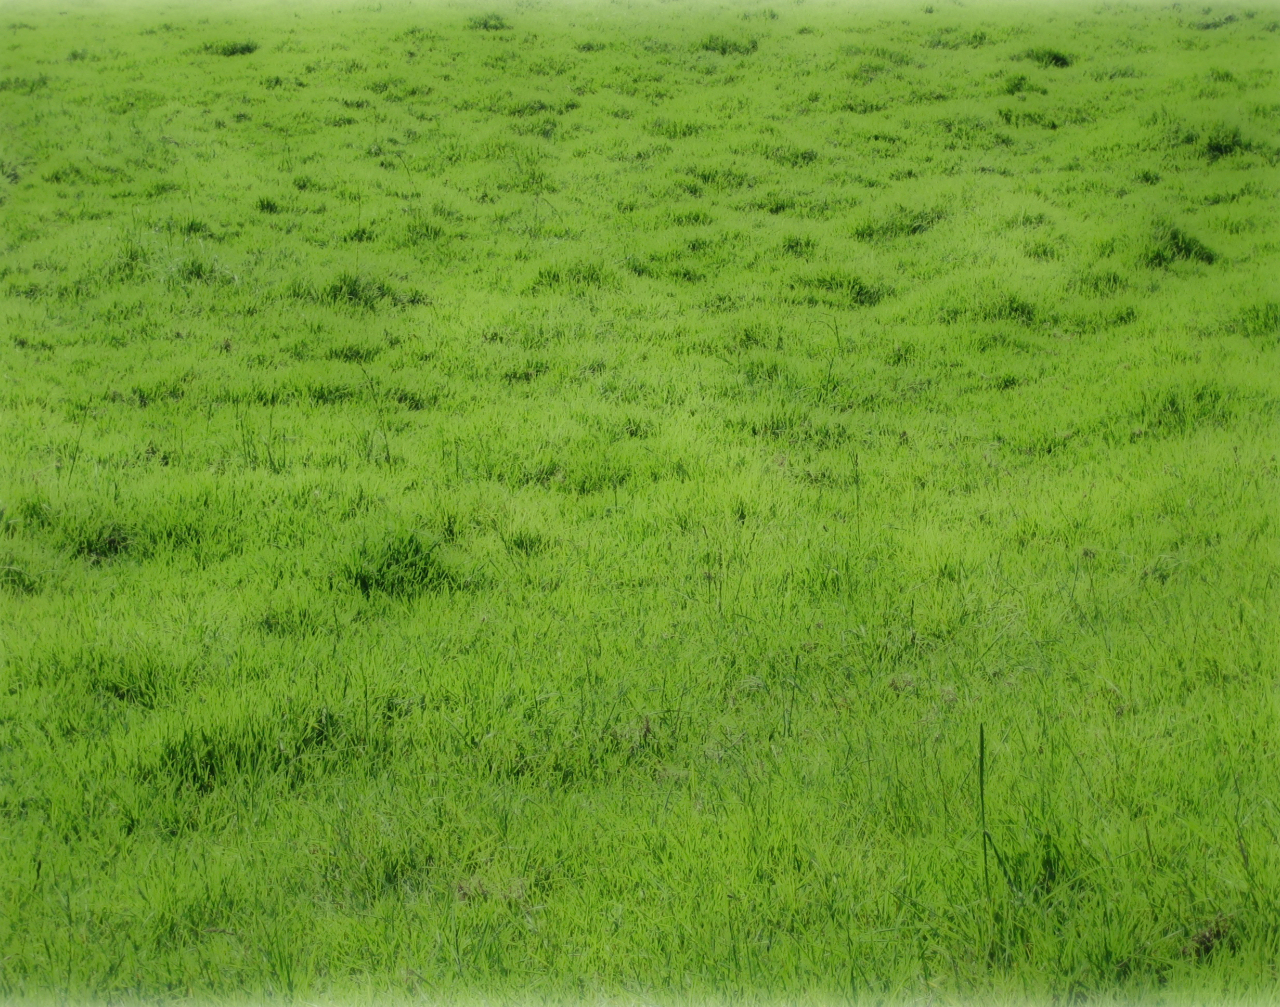 Grassy Field Backgrounds